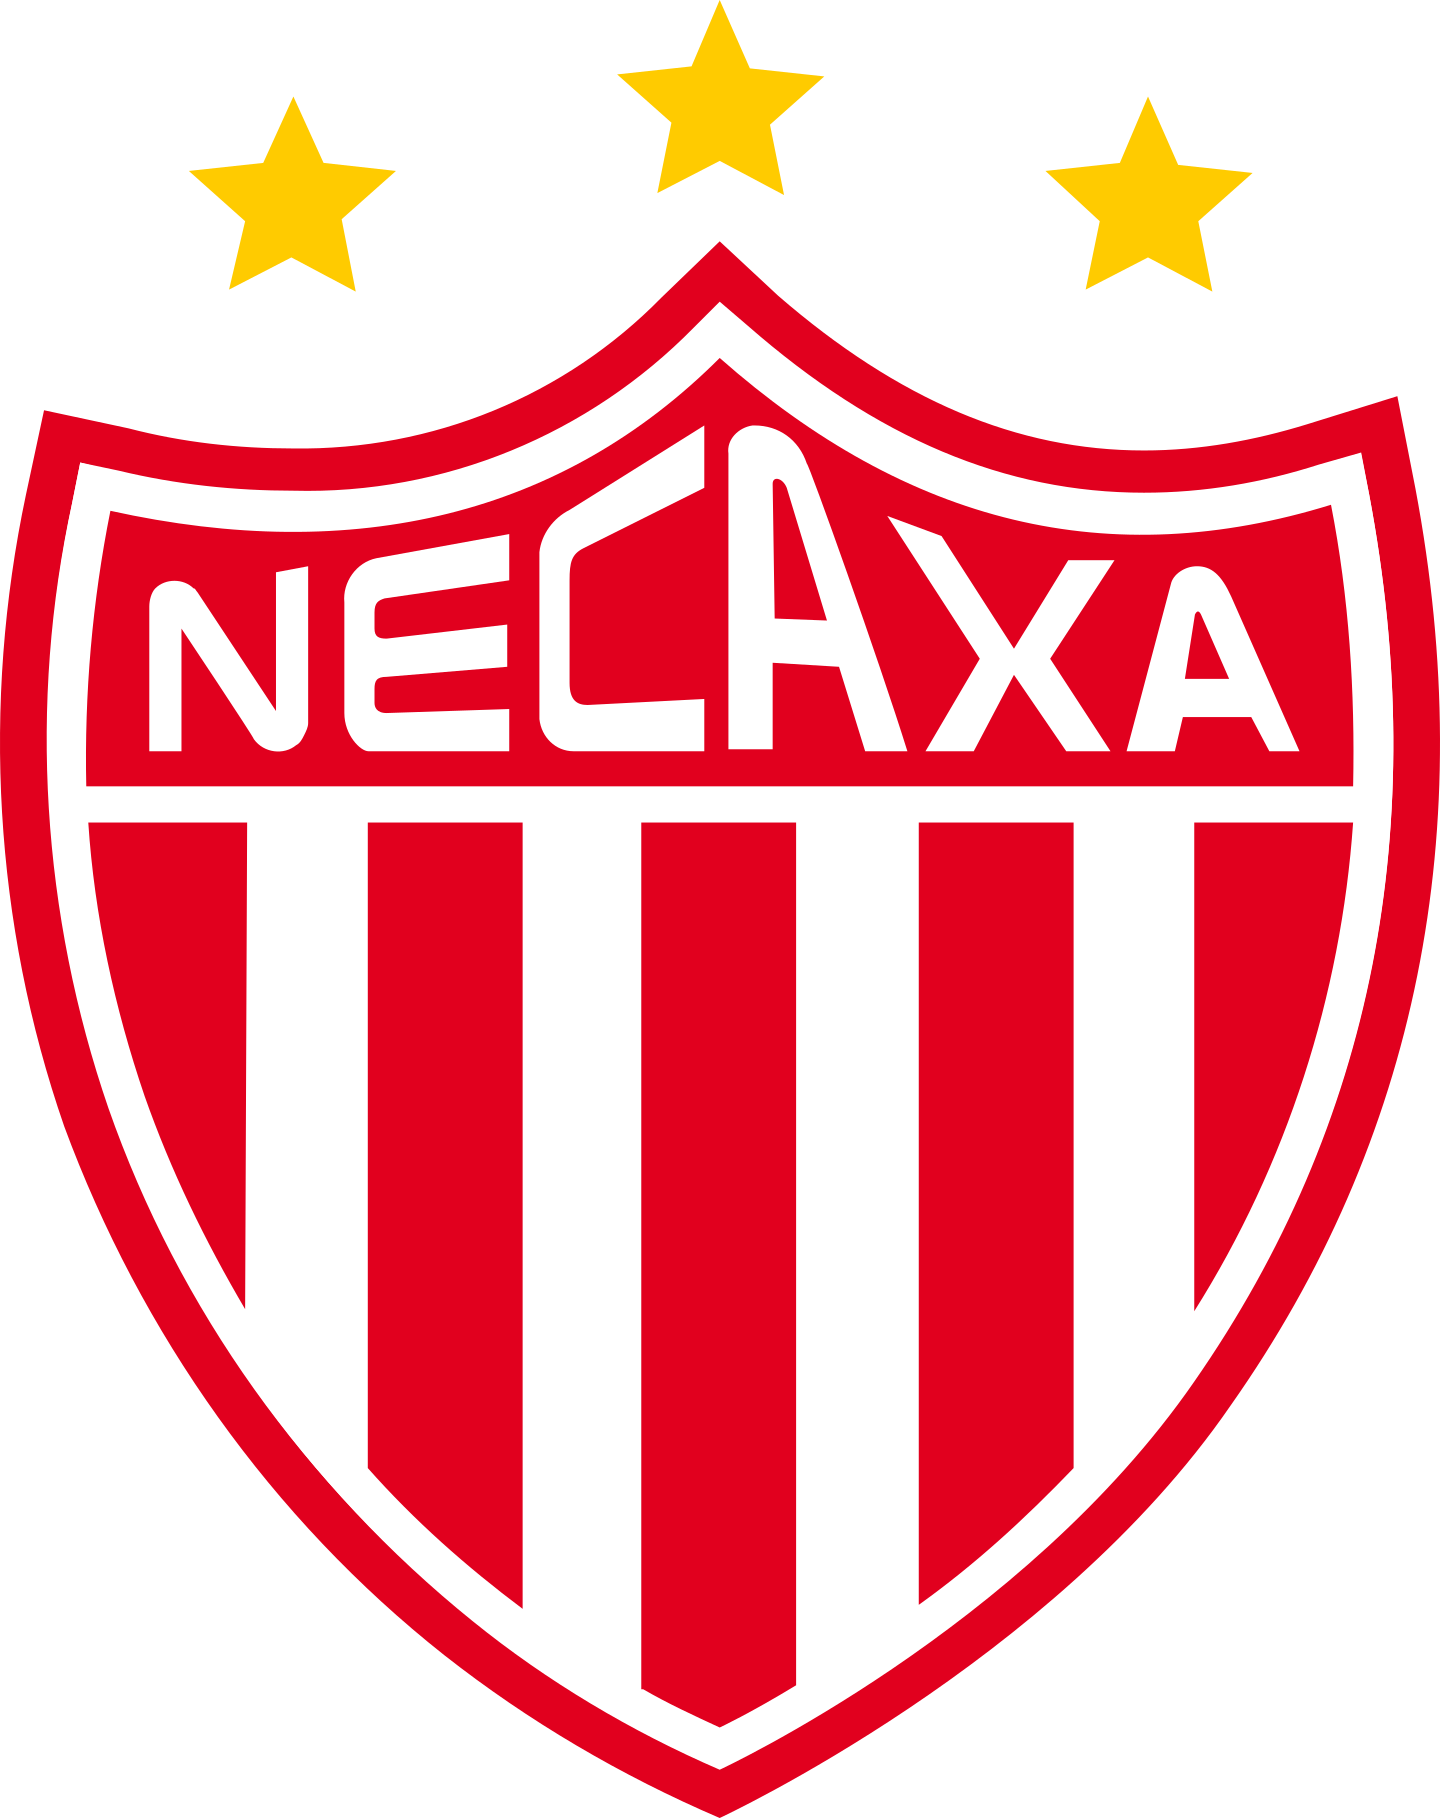 Club Necaxa Logo.